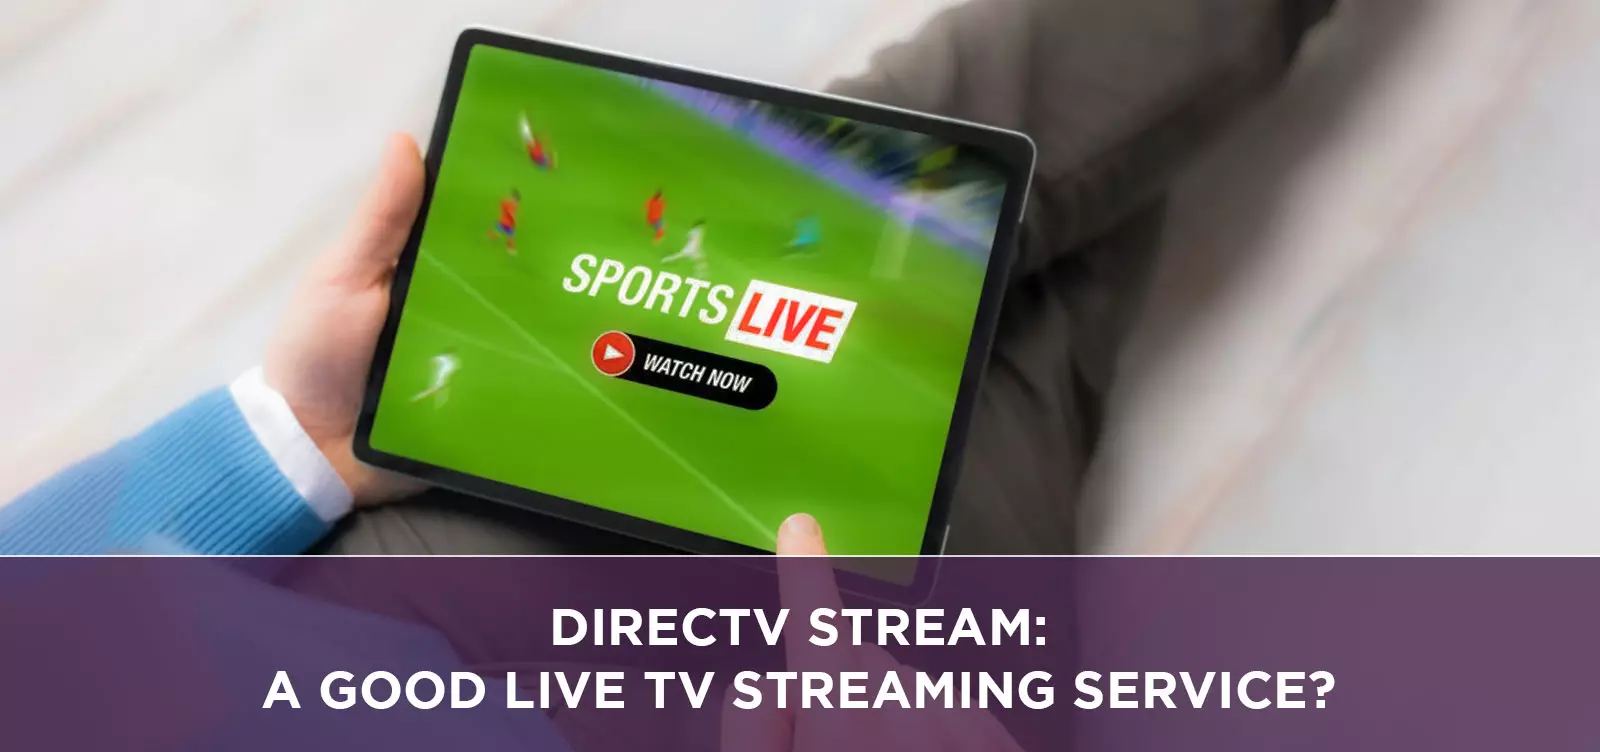 DIRECTV STREAM: A Good Live TV Streaming Service?